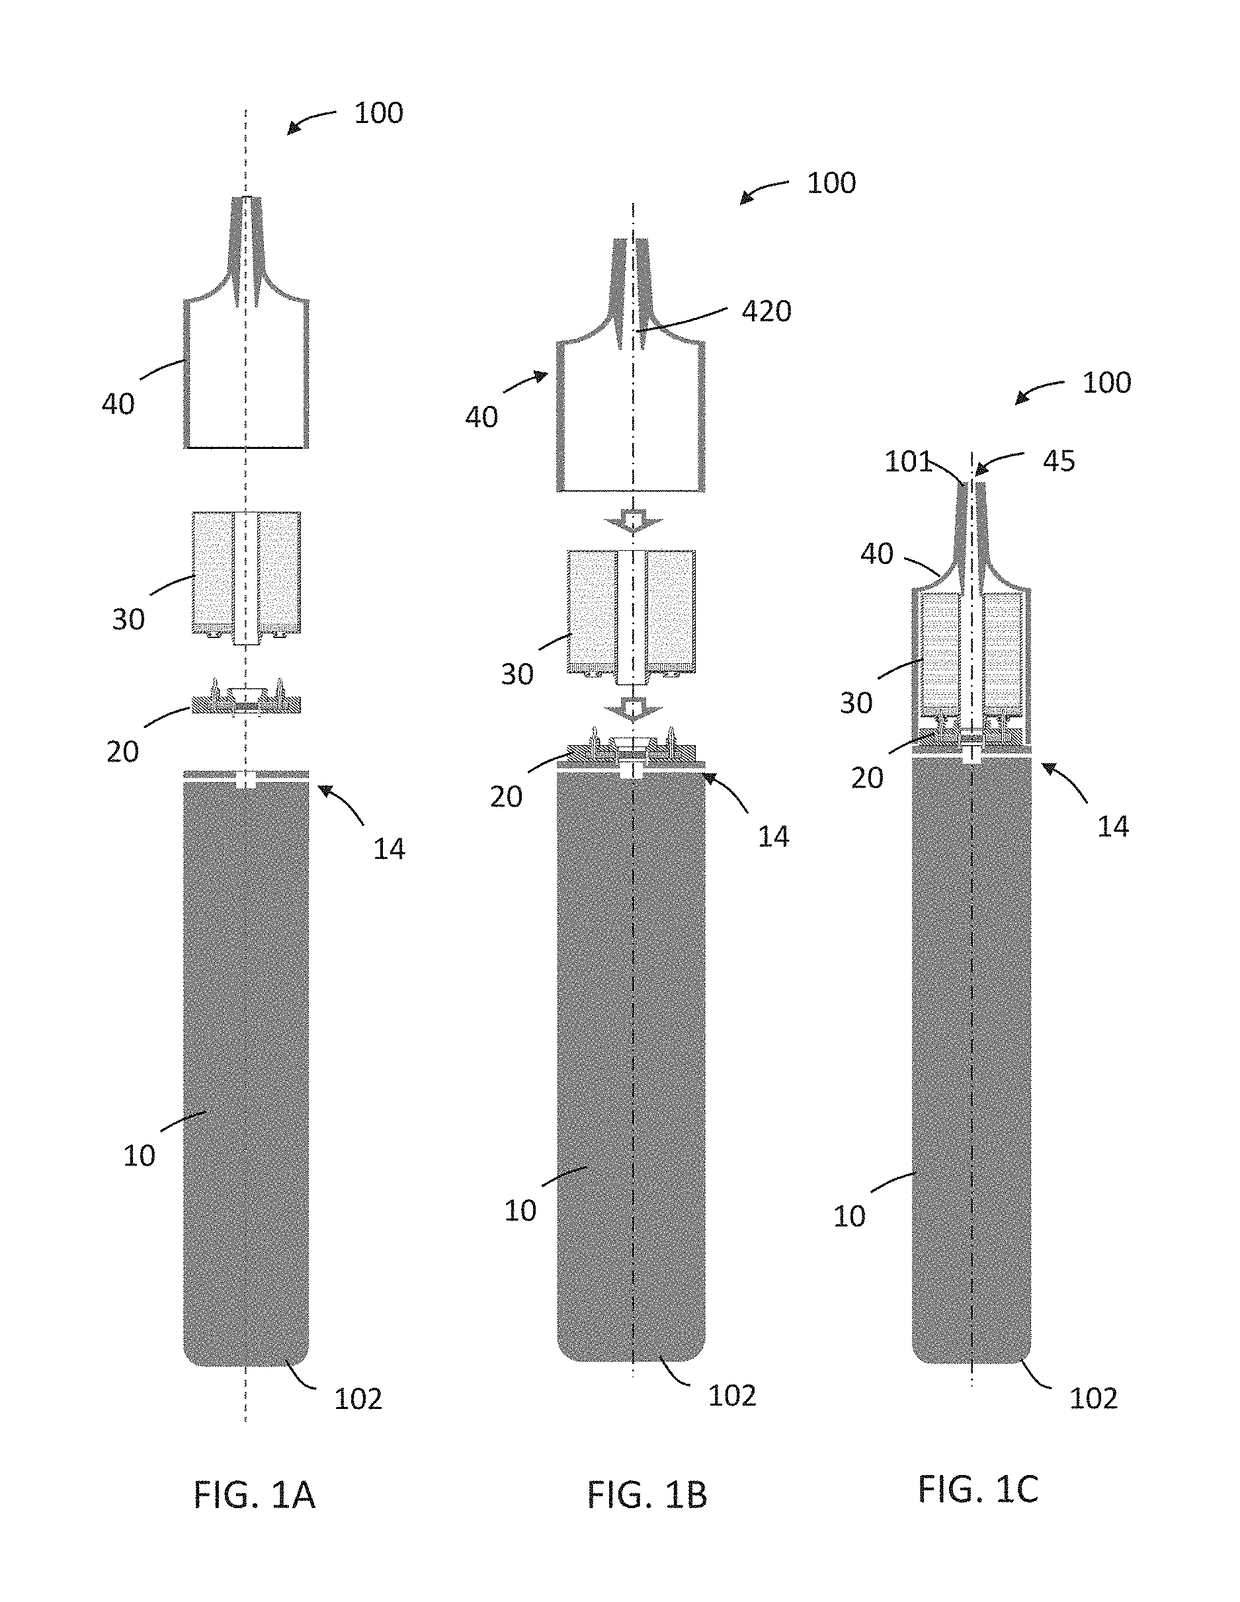 Aerosol-generating system with separate capsule and vaporizing unit